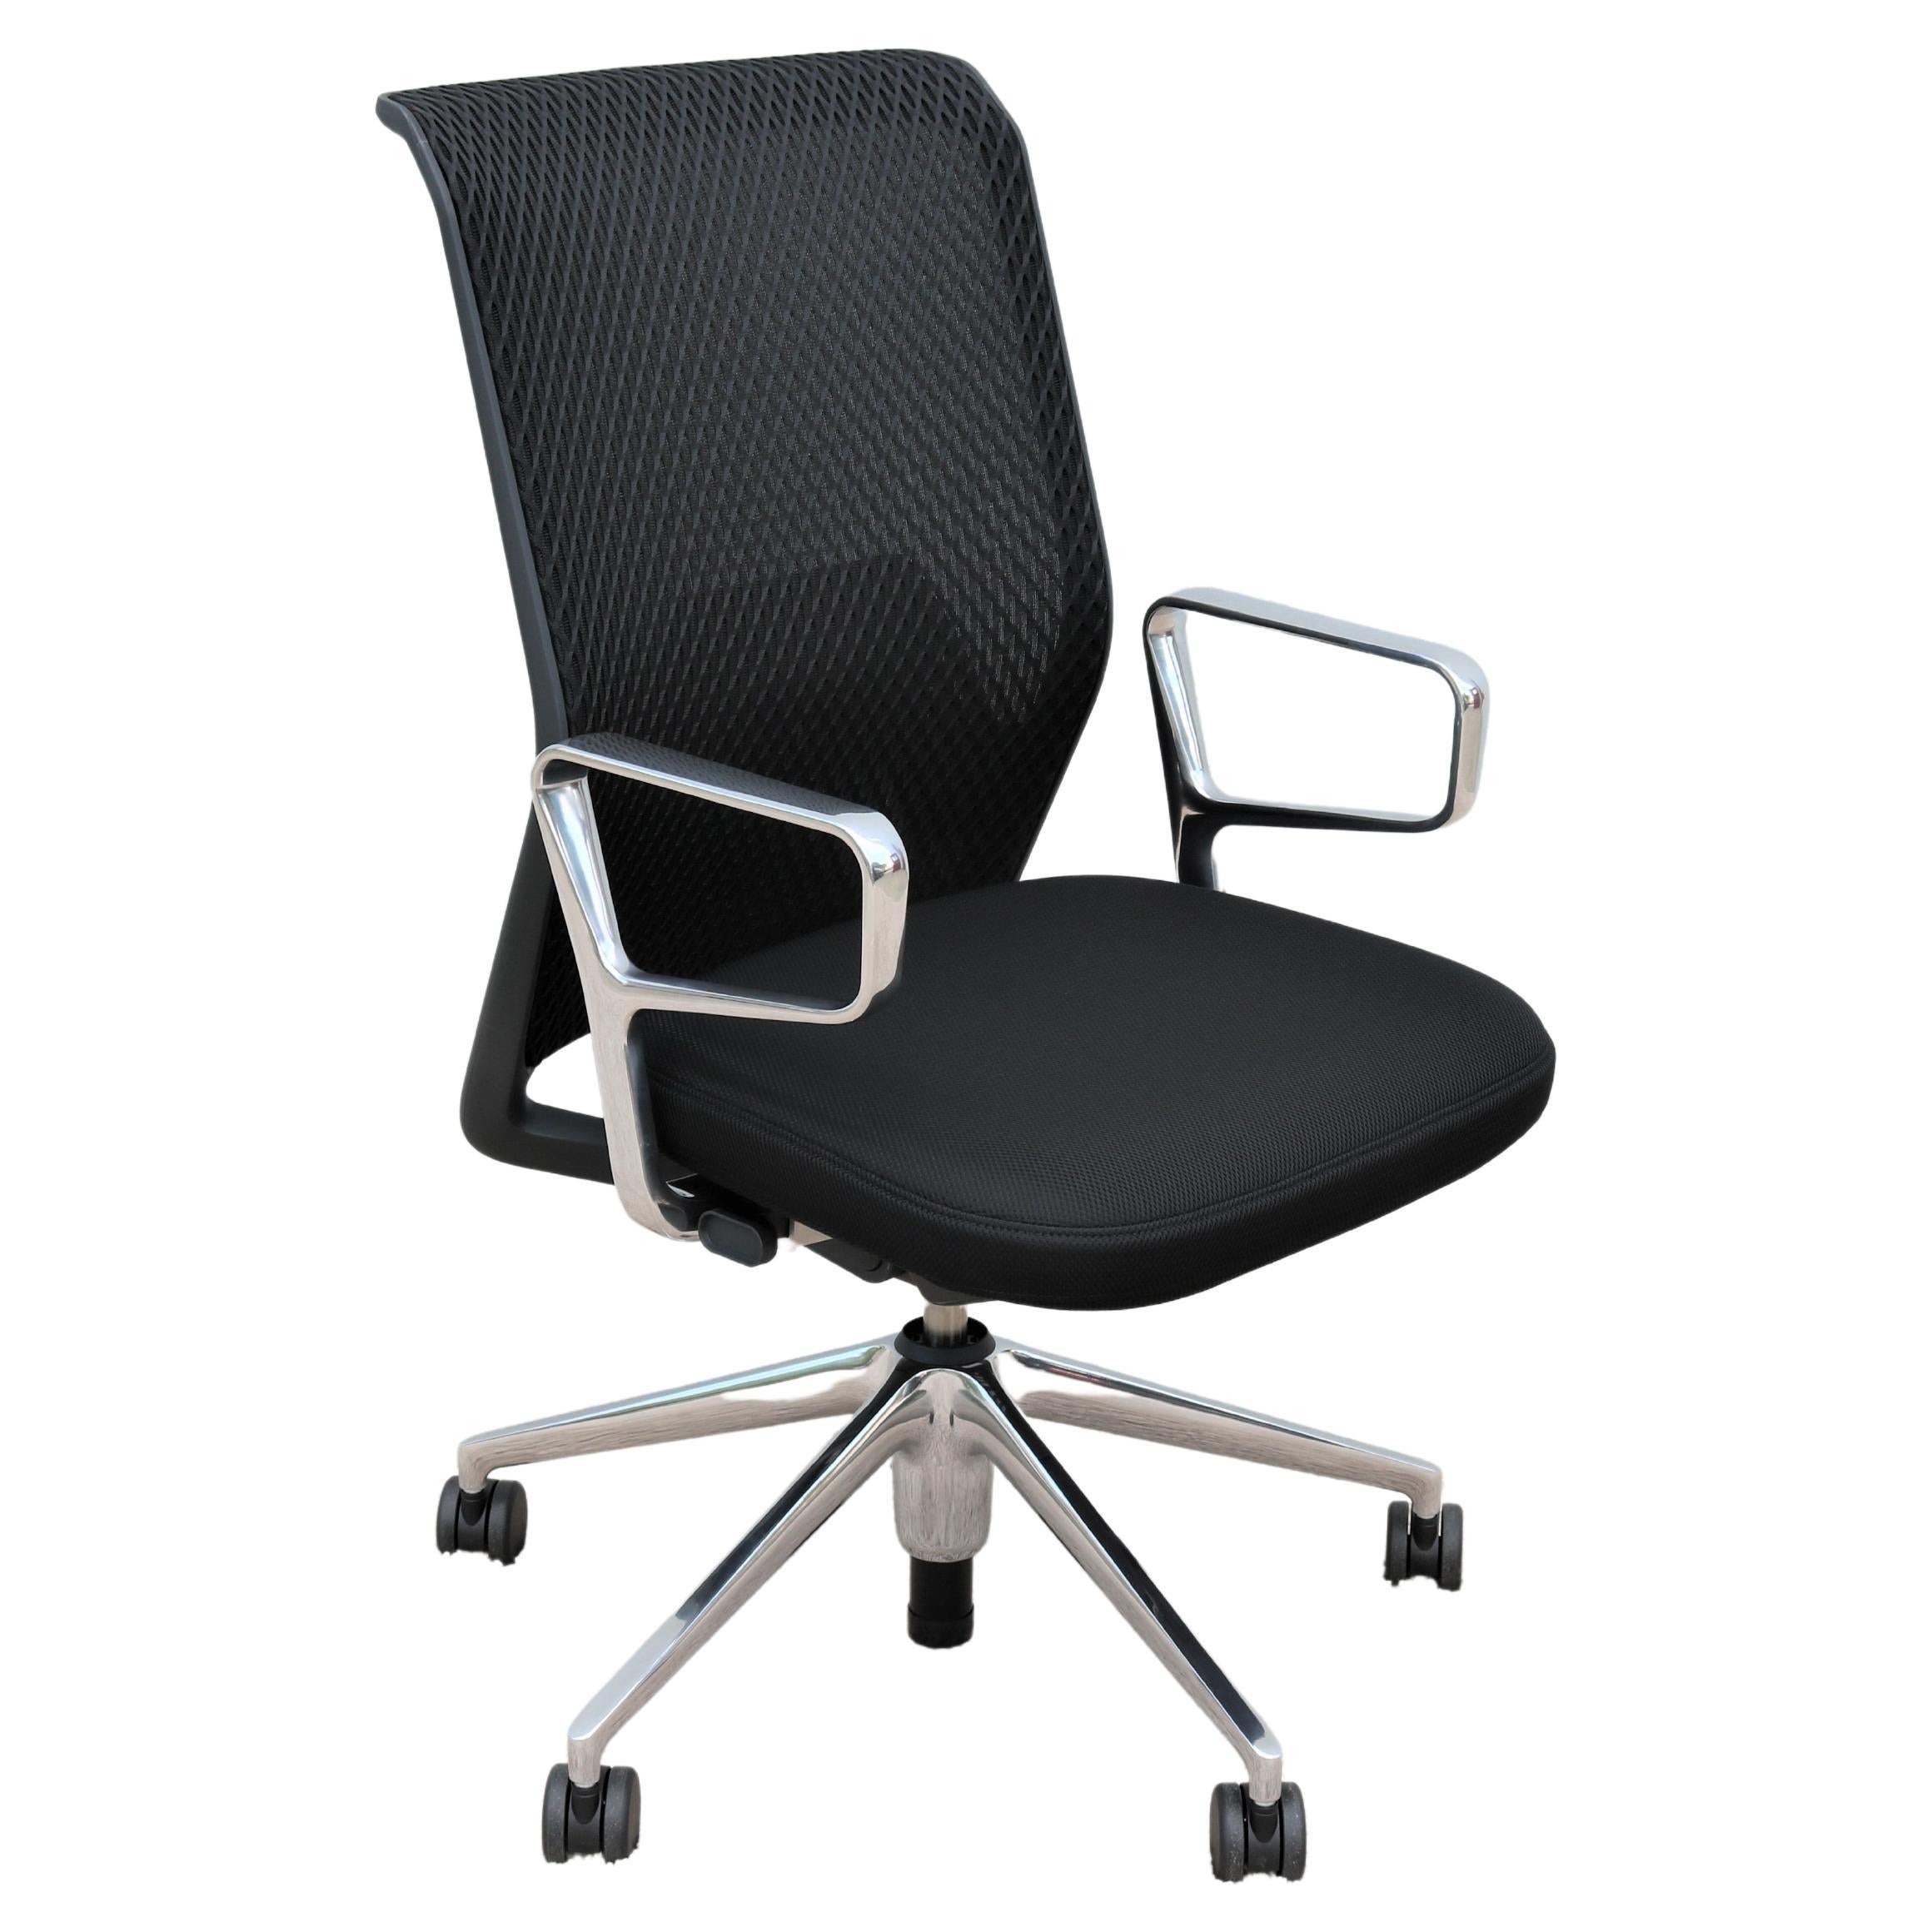 Antonio Citterio for Vitra Ergonomic ID Mesh Black Office Desk Chair, Brand New